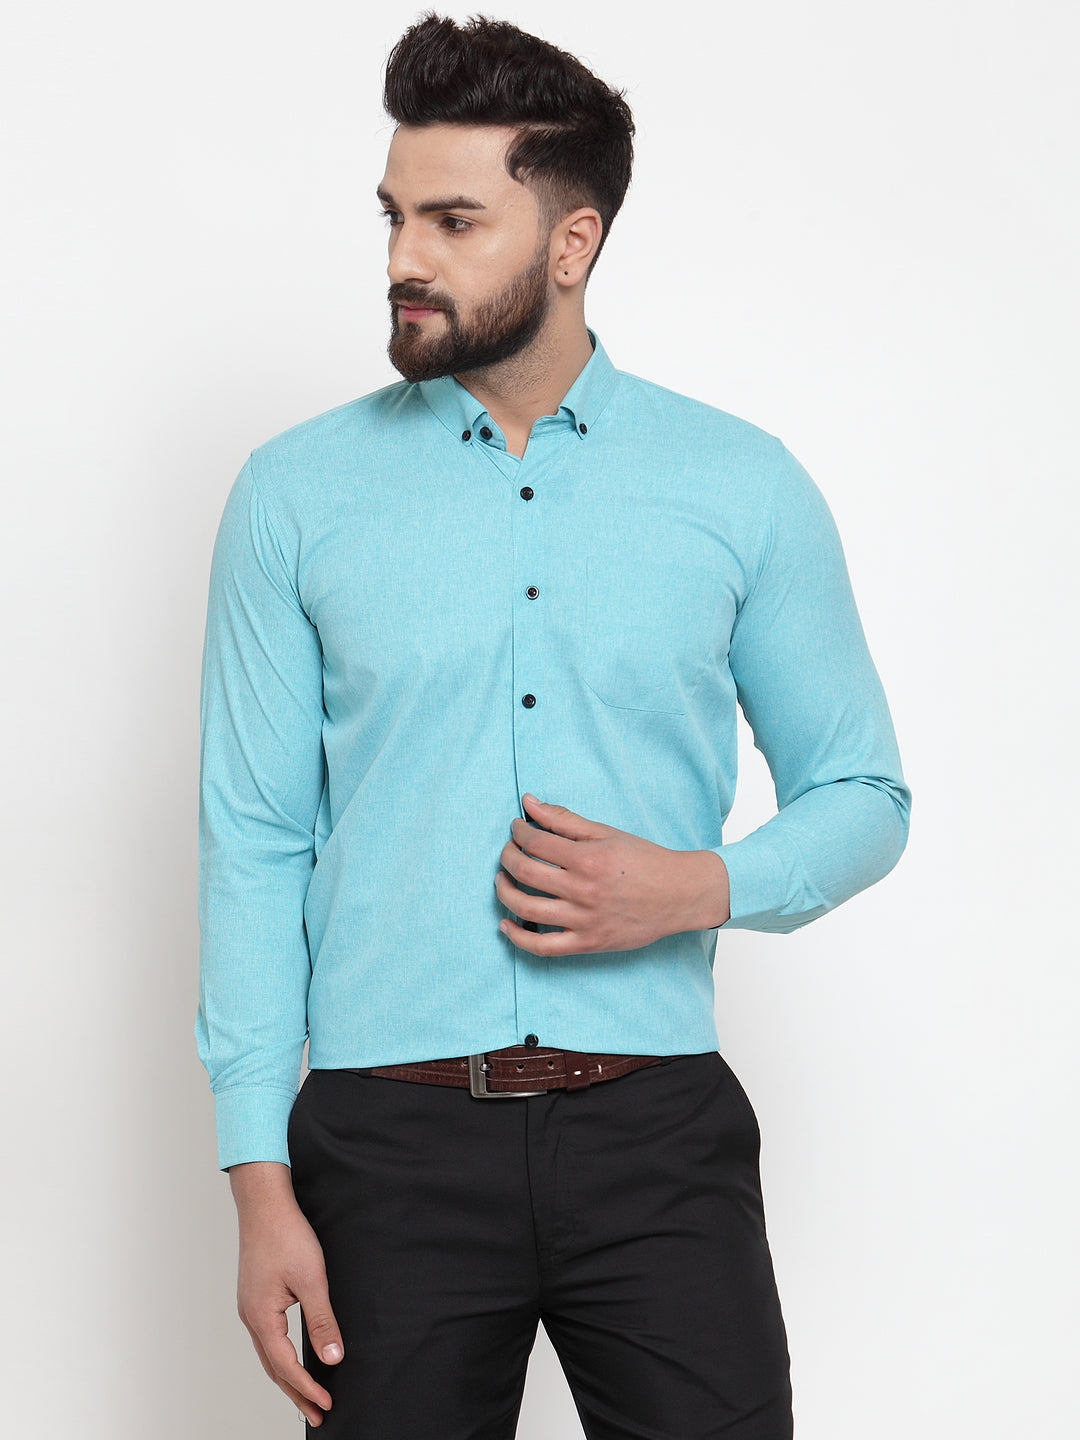 Men's Green Cotton Solid Button Down Formal Shirts ( SF 734Aqua ) - Jainish